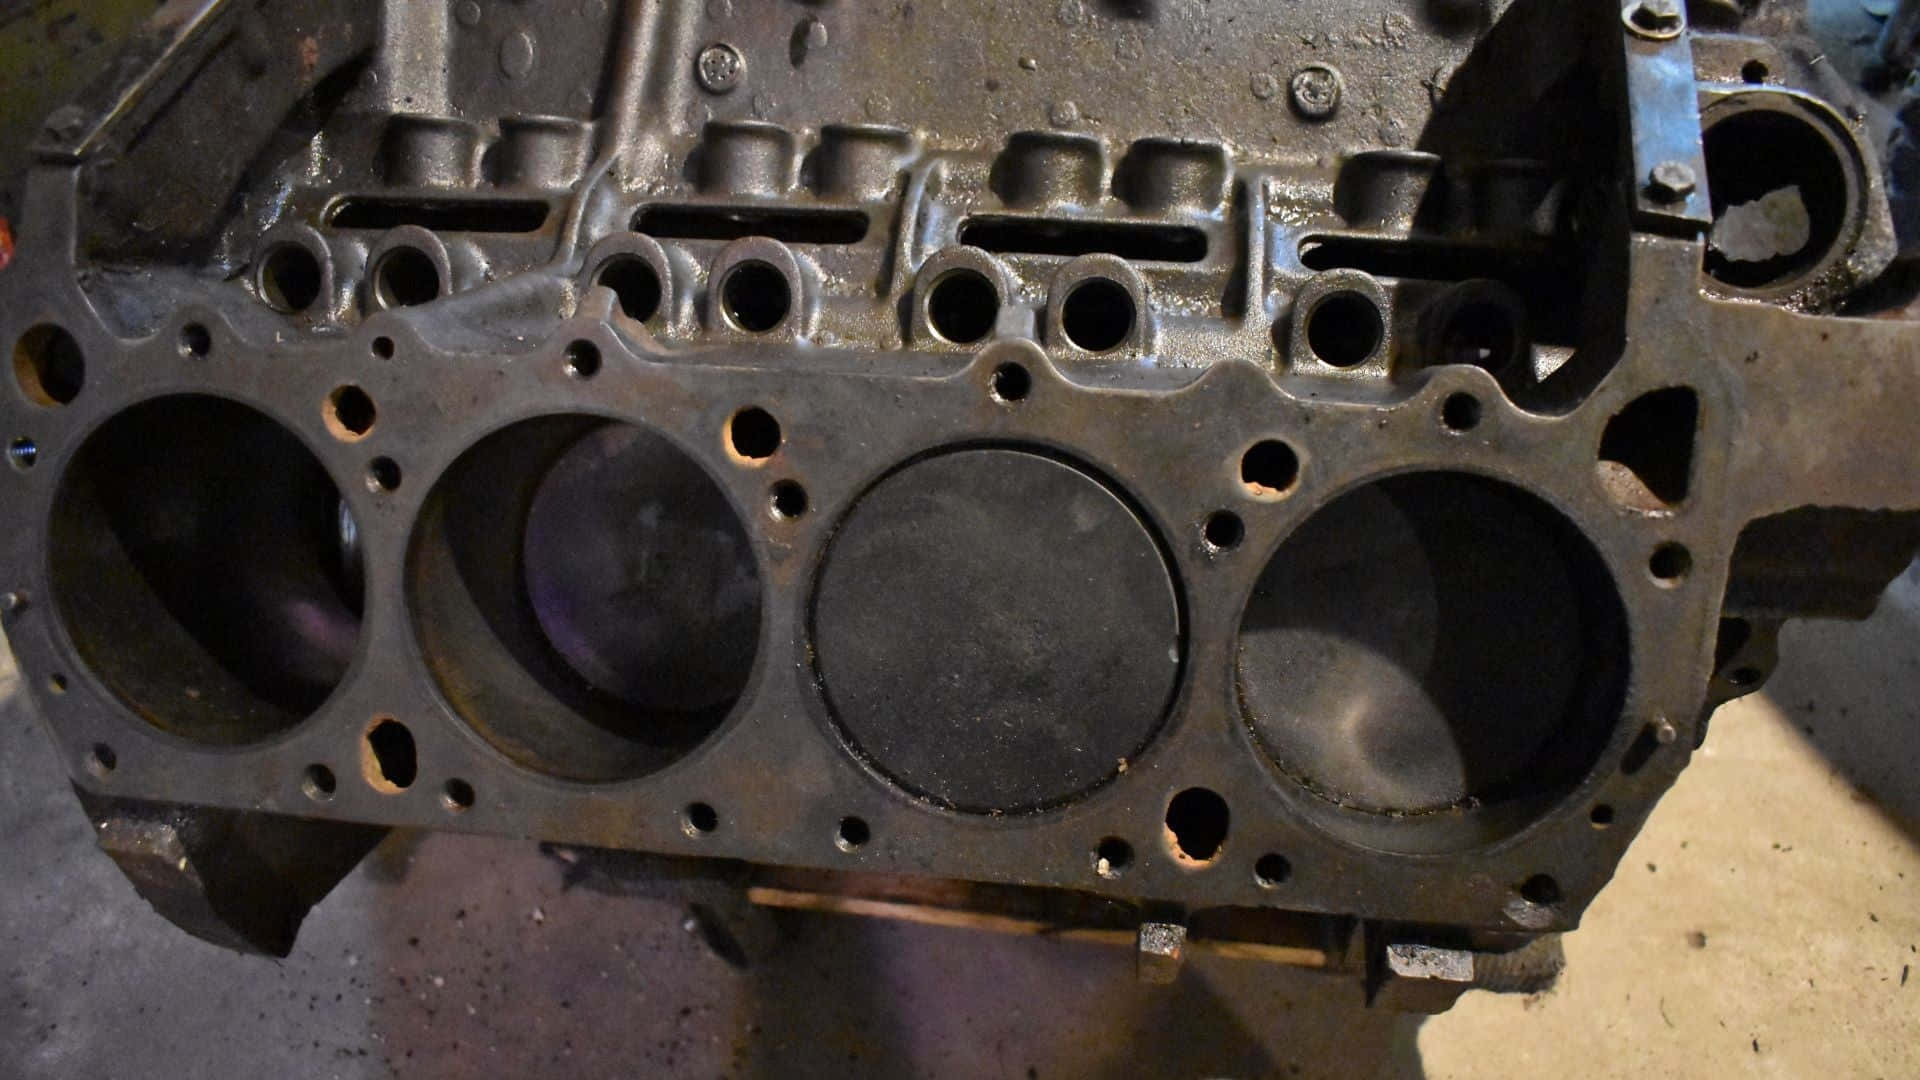 "A look inside a car engine."